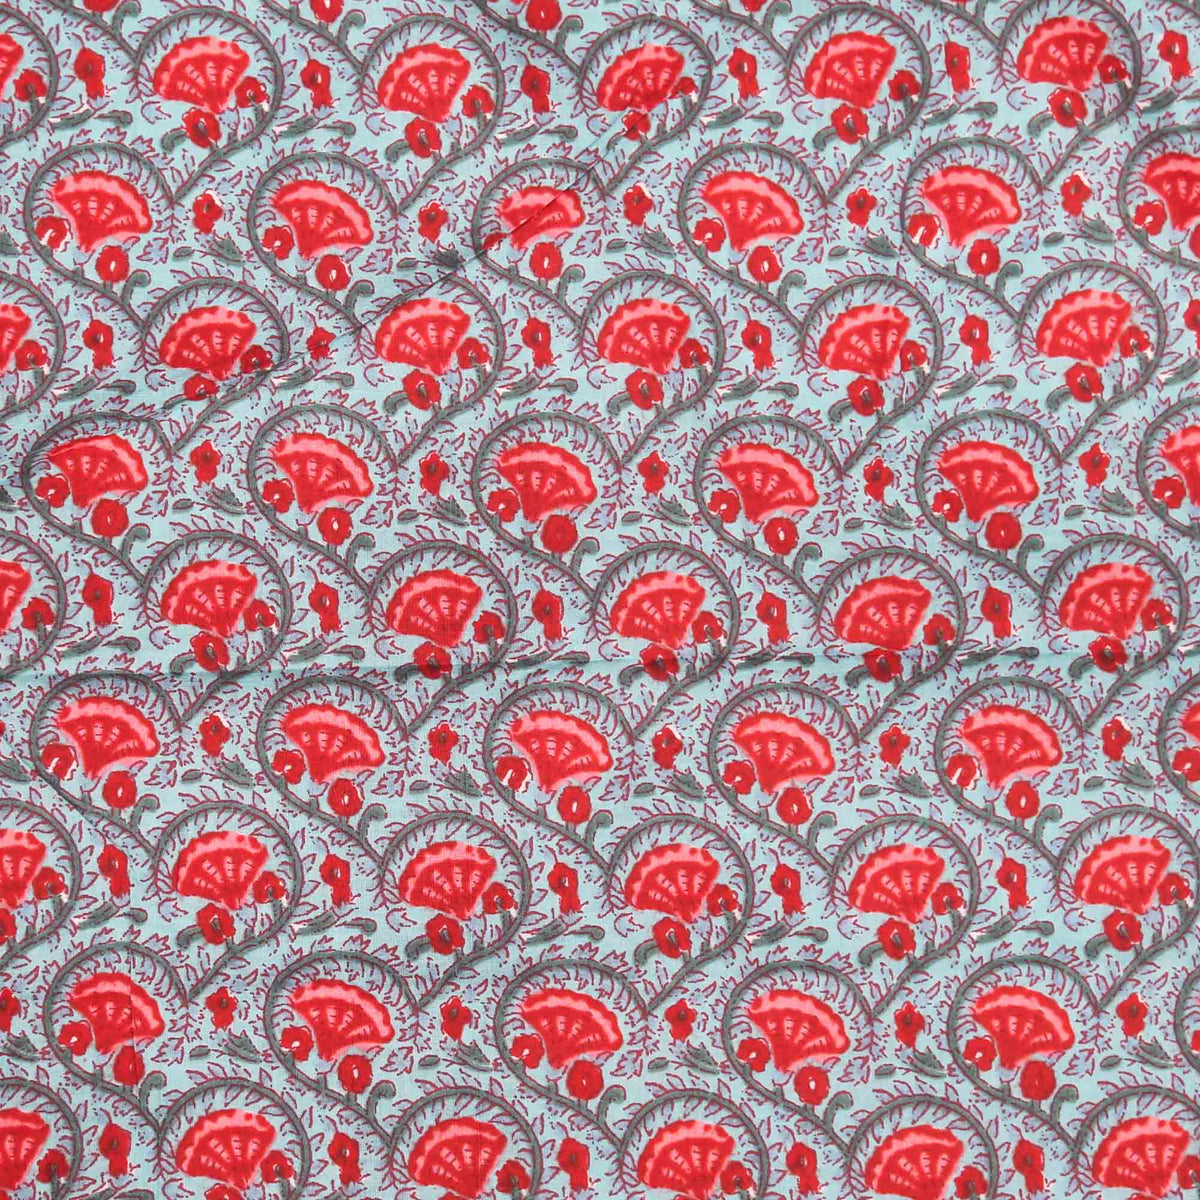 Block Printed 100% Cotton Women Dress Fabric Red  Cloves Flowers Design 440